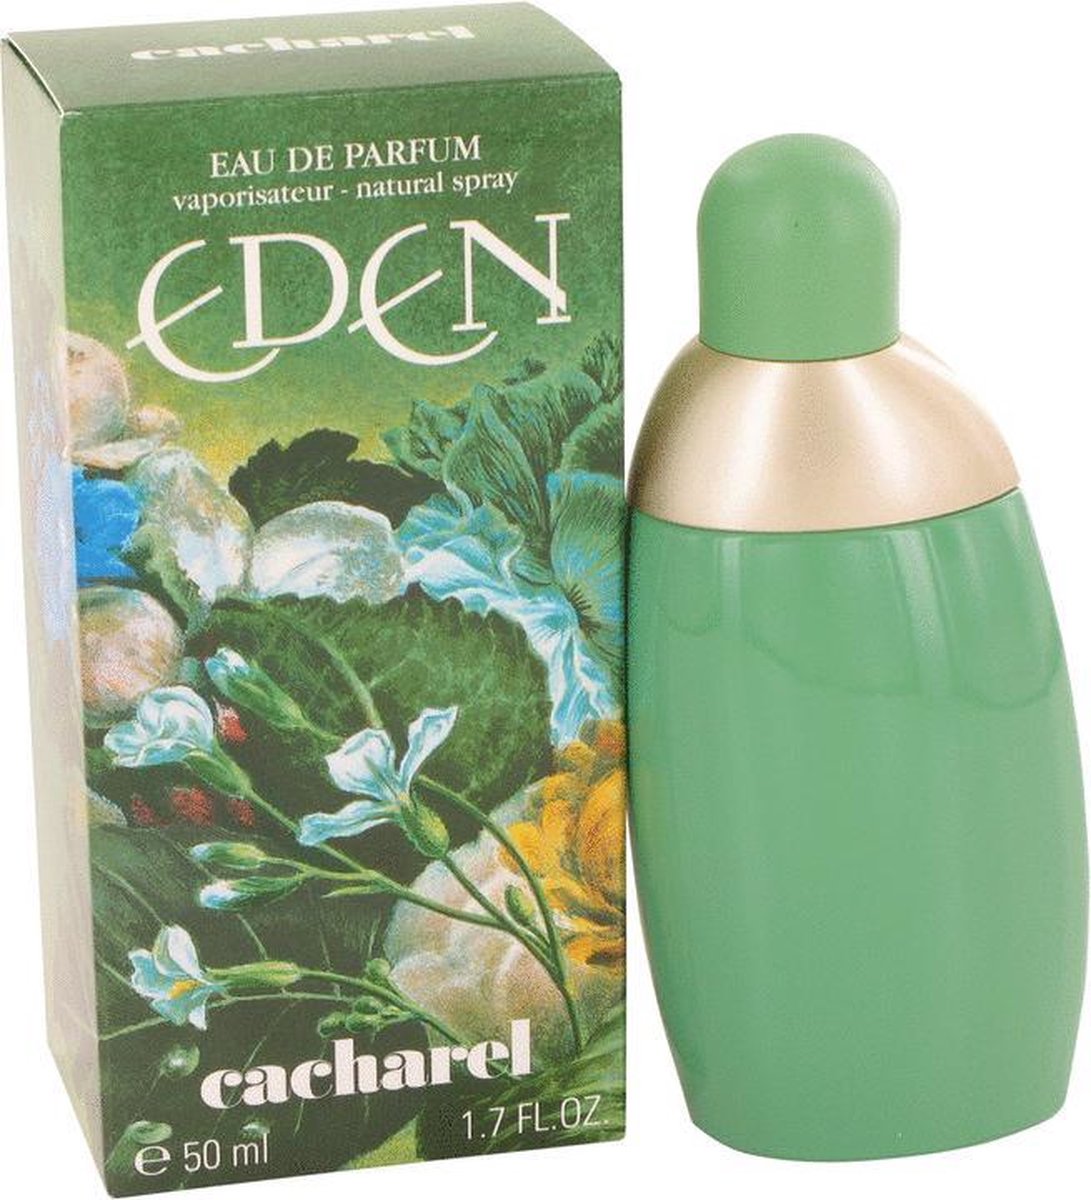 Cacharel - EDEN - eau de parfum - spray 50 ml